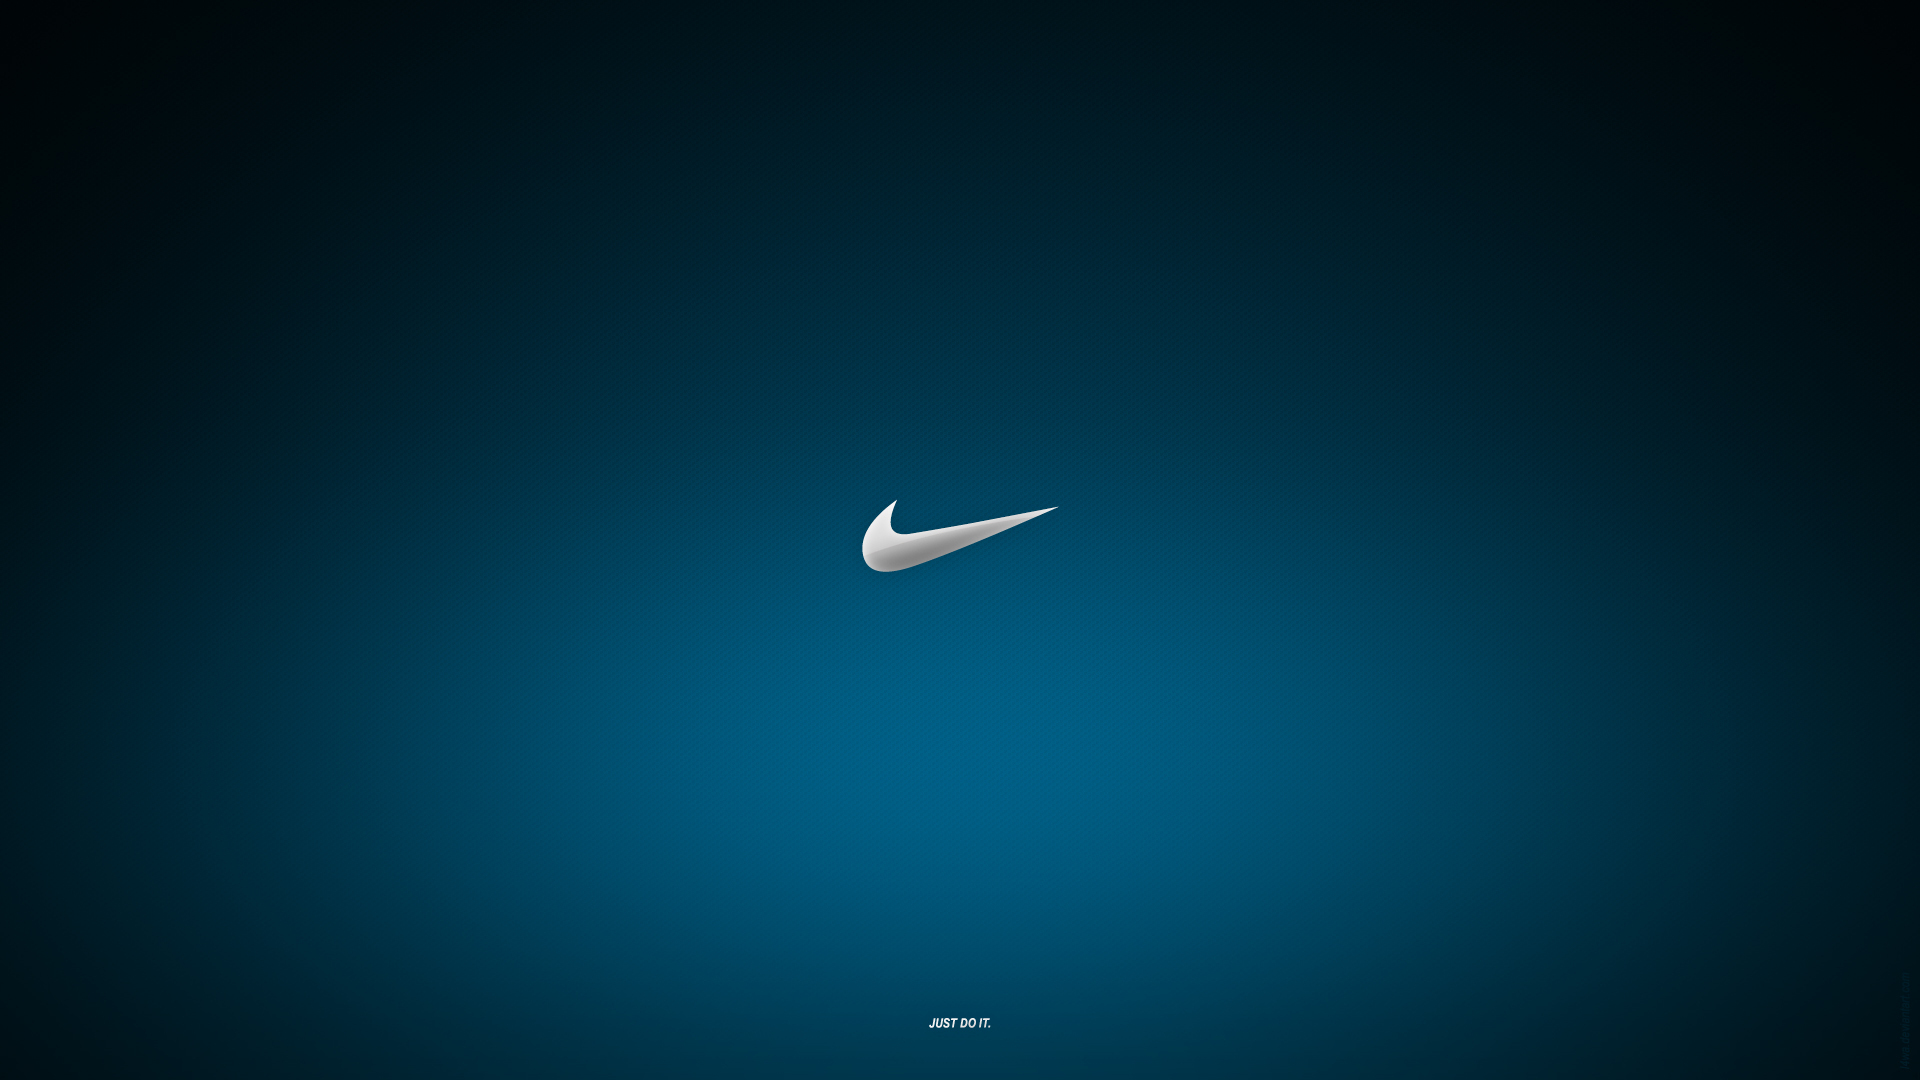 Wallpaper Marke Nike 3d F R Desktop Bilder